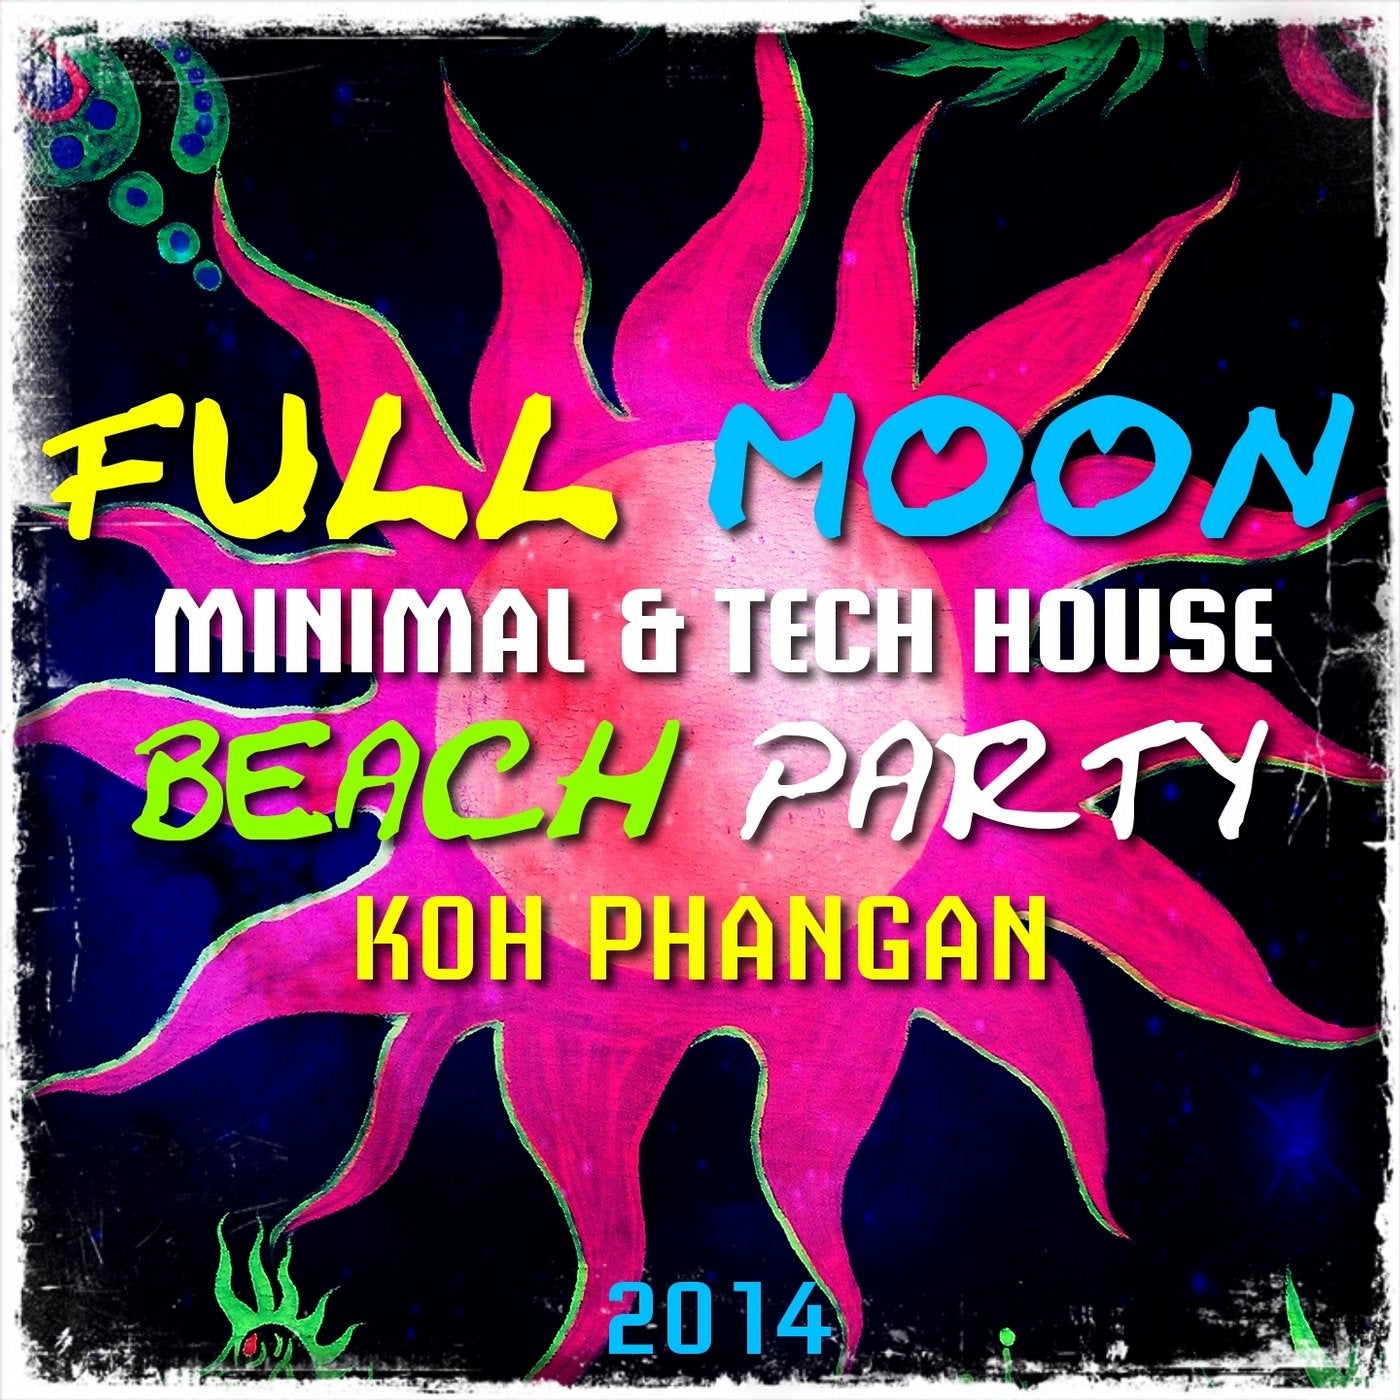 Full Moon Minimal & Tech House Beach Party 2014 (Koh Phangan)